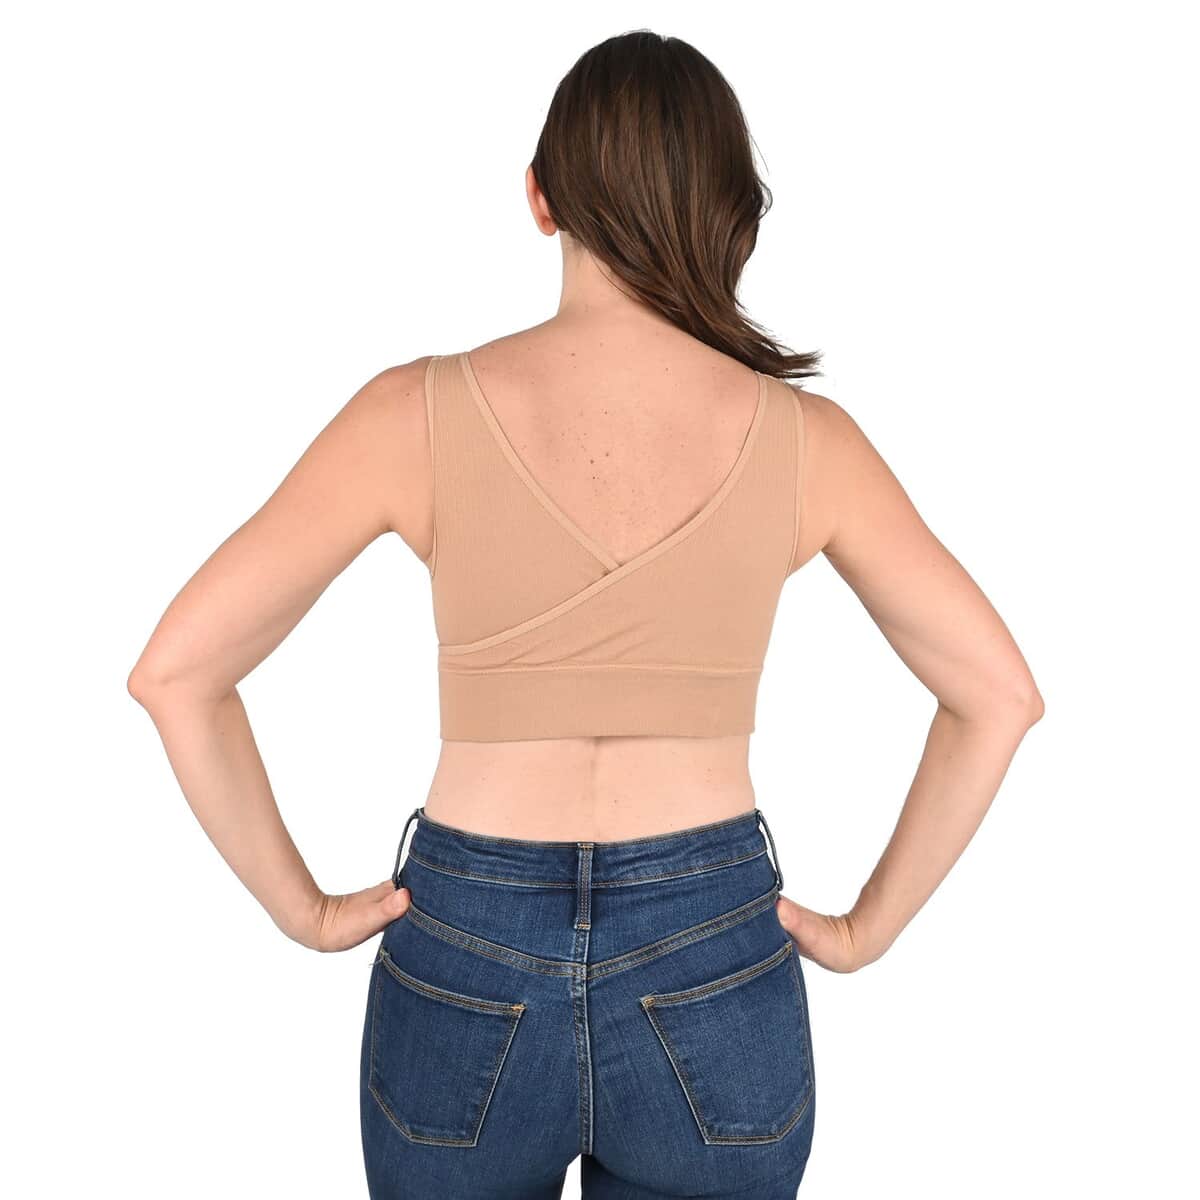 Sankom Patent Organic Cotton Support & Posture Bra - (Small) Beige image number 1